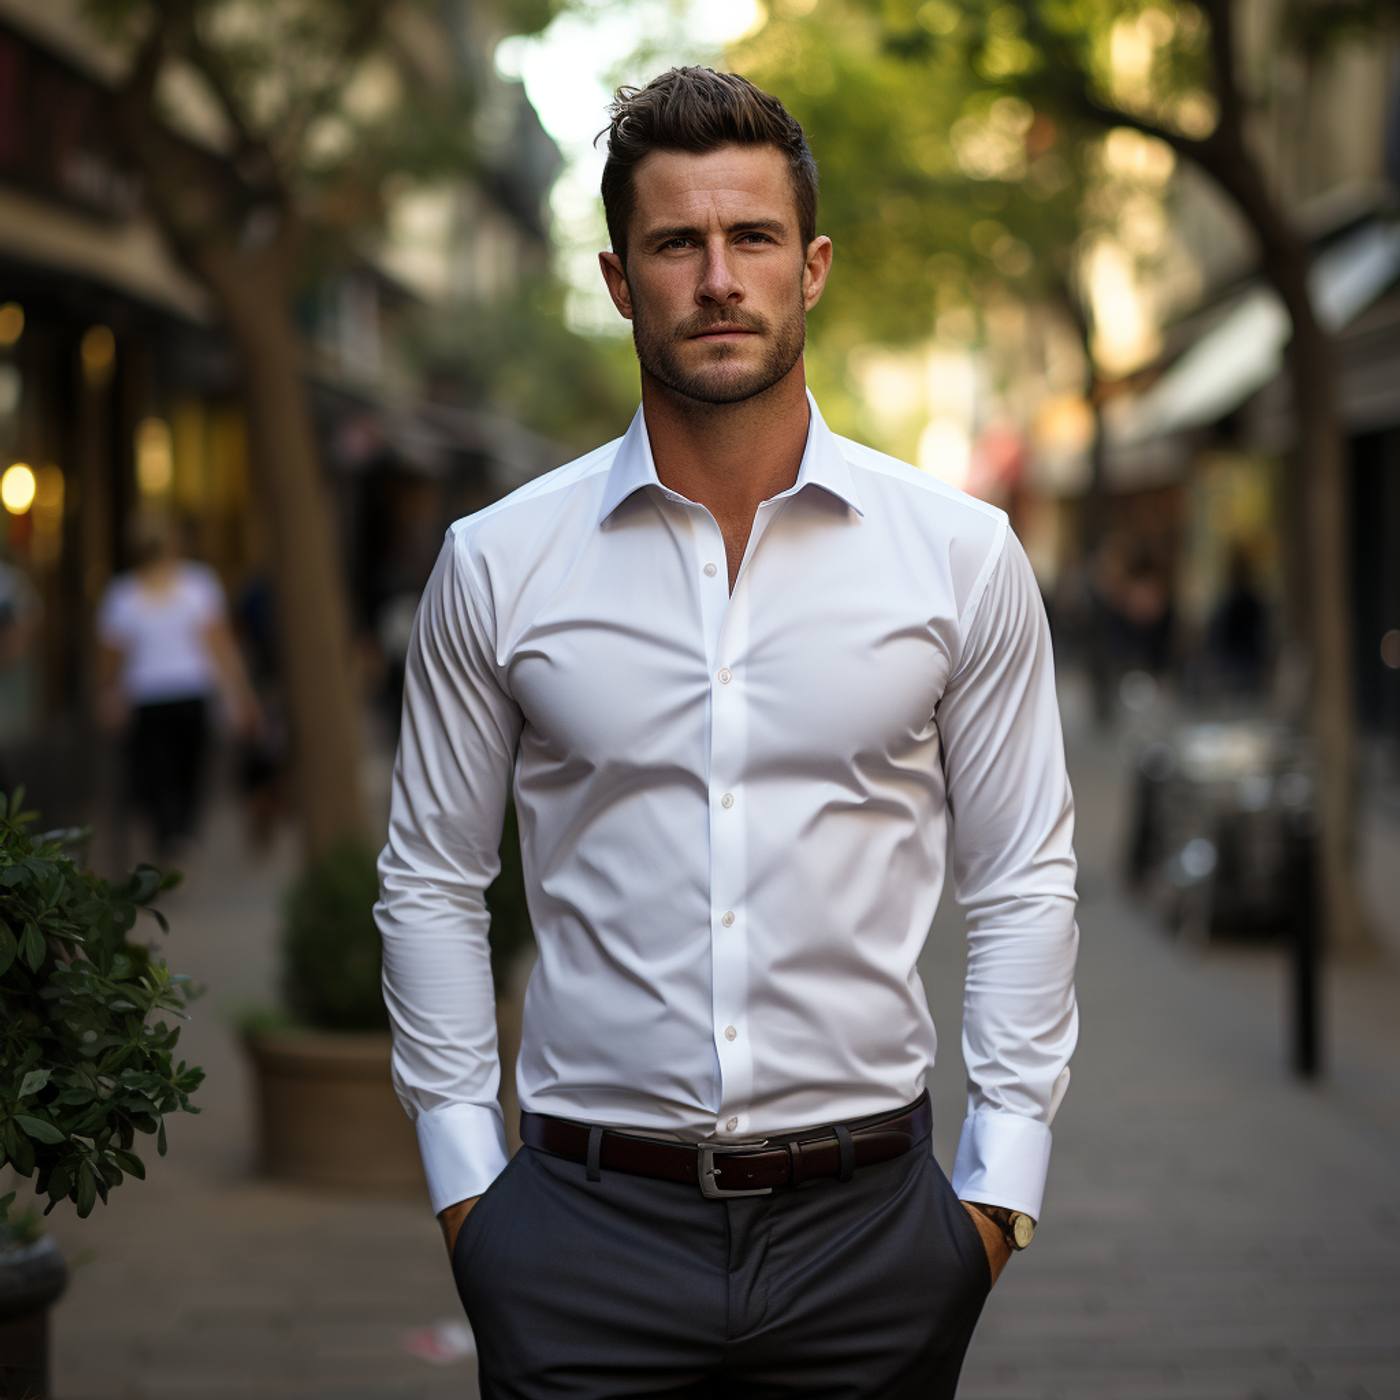 Men's Dress Shirts, Fitted, Regular & Slim Styles